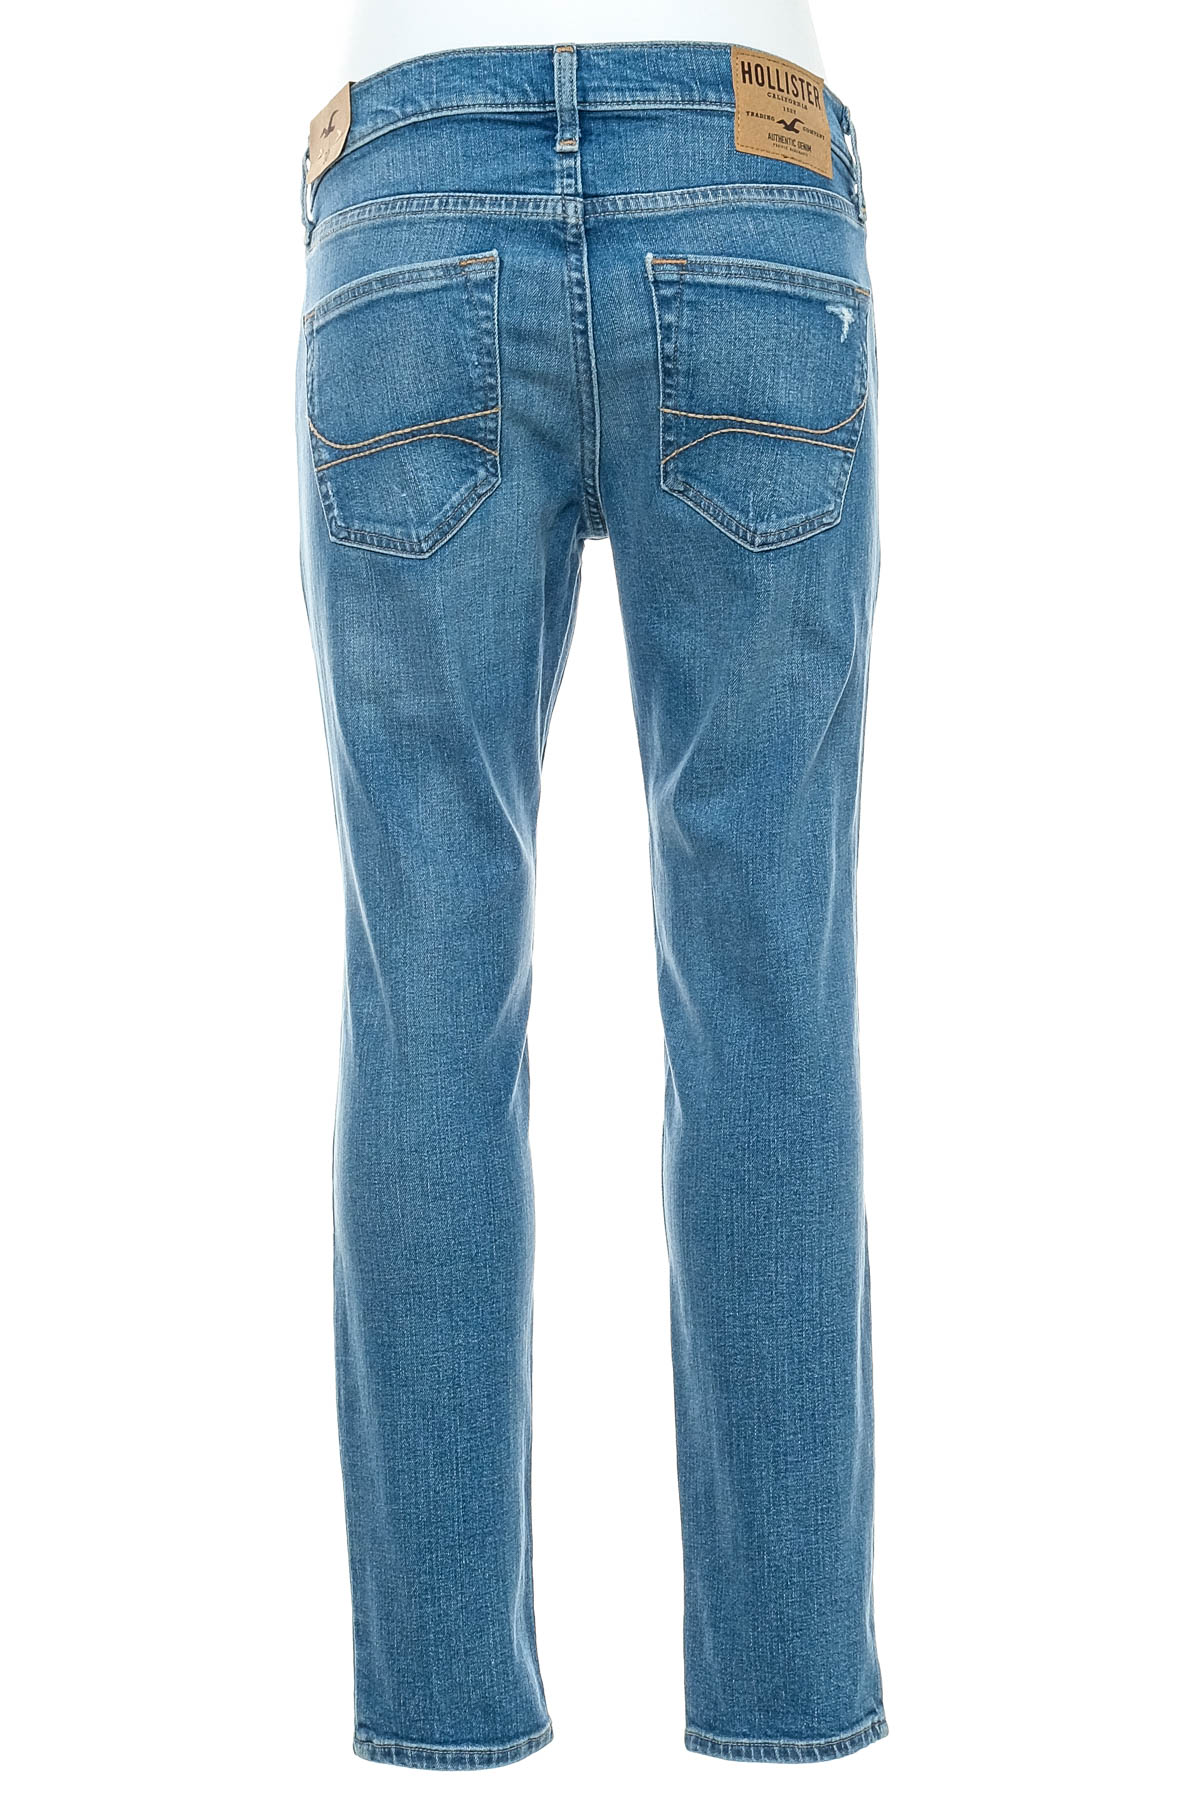 Men's jeans - HOLLISTER - 1